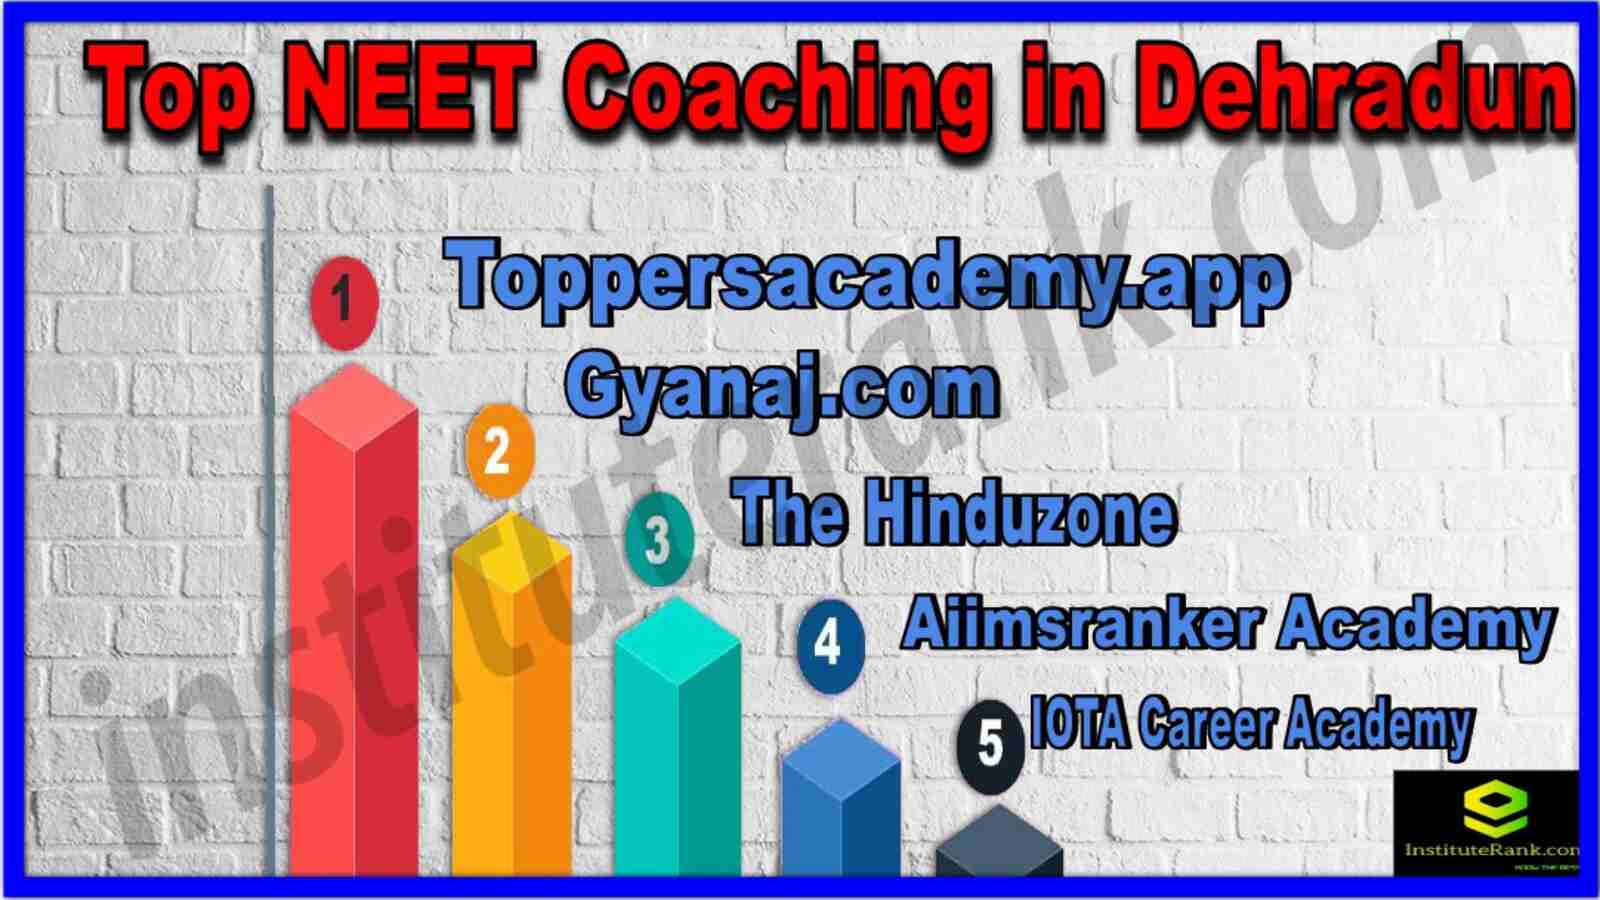 Top NEET Coaching in Dehradun